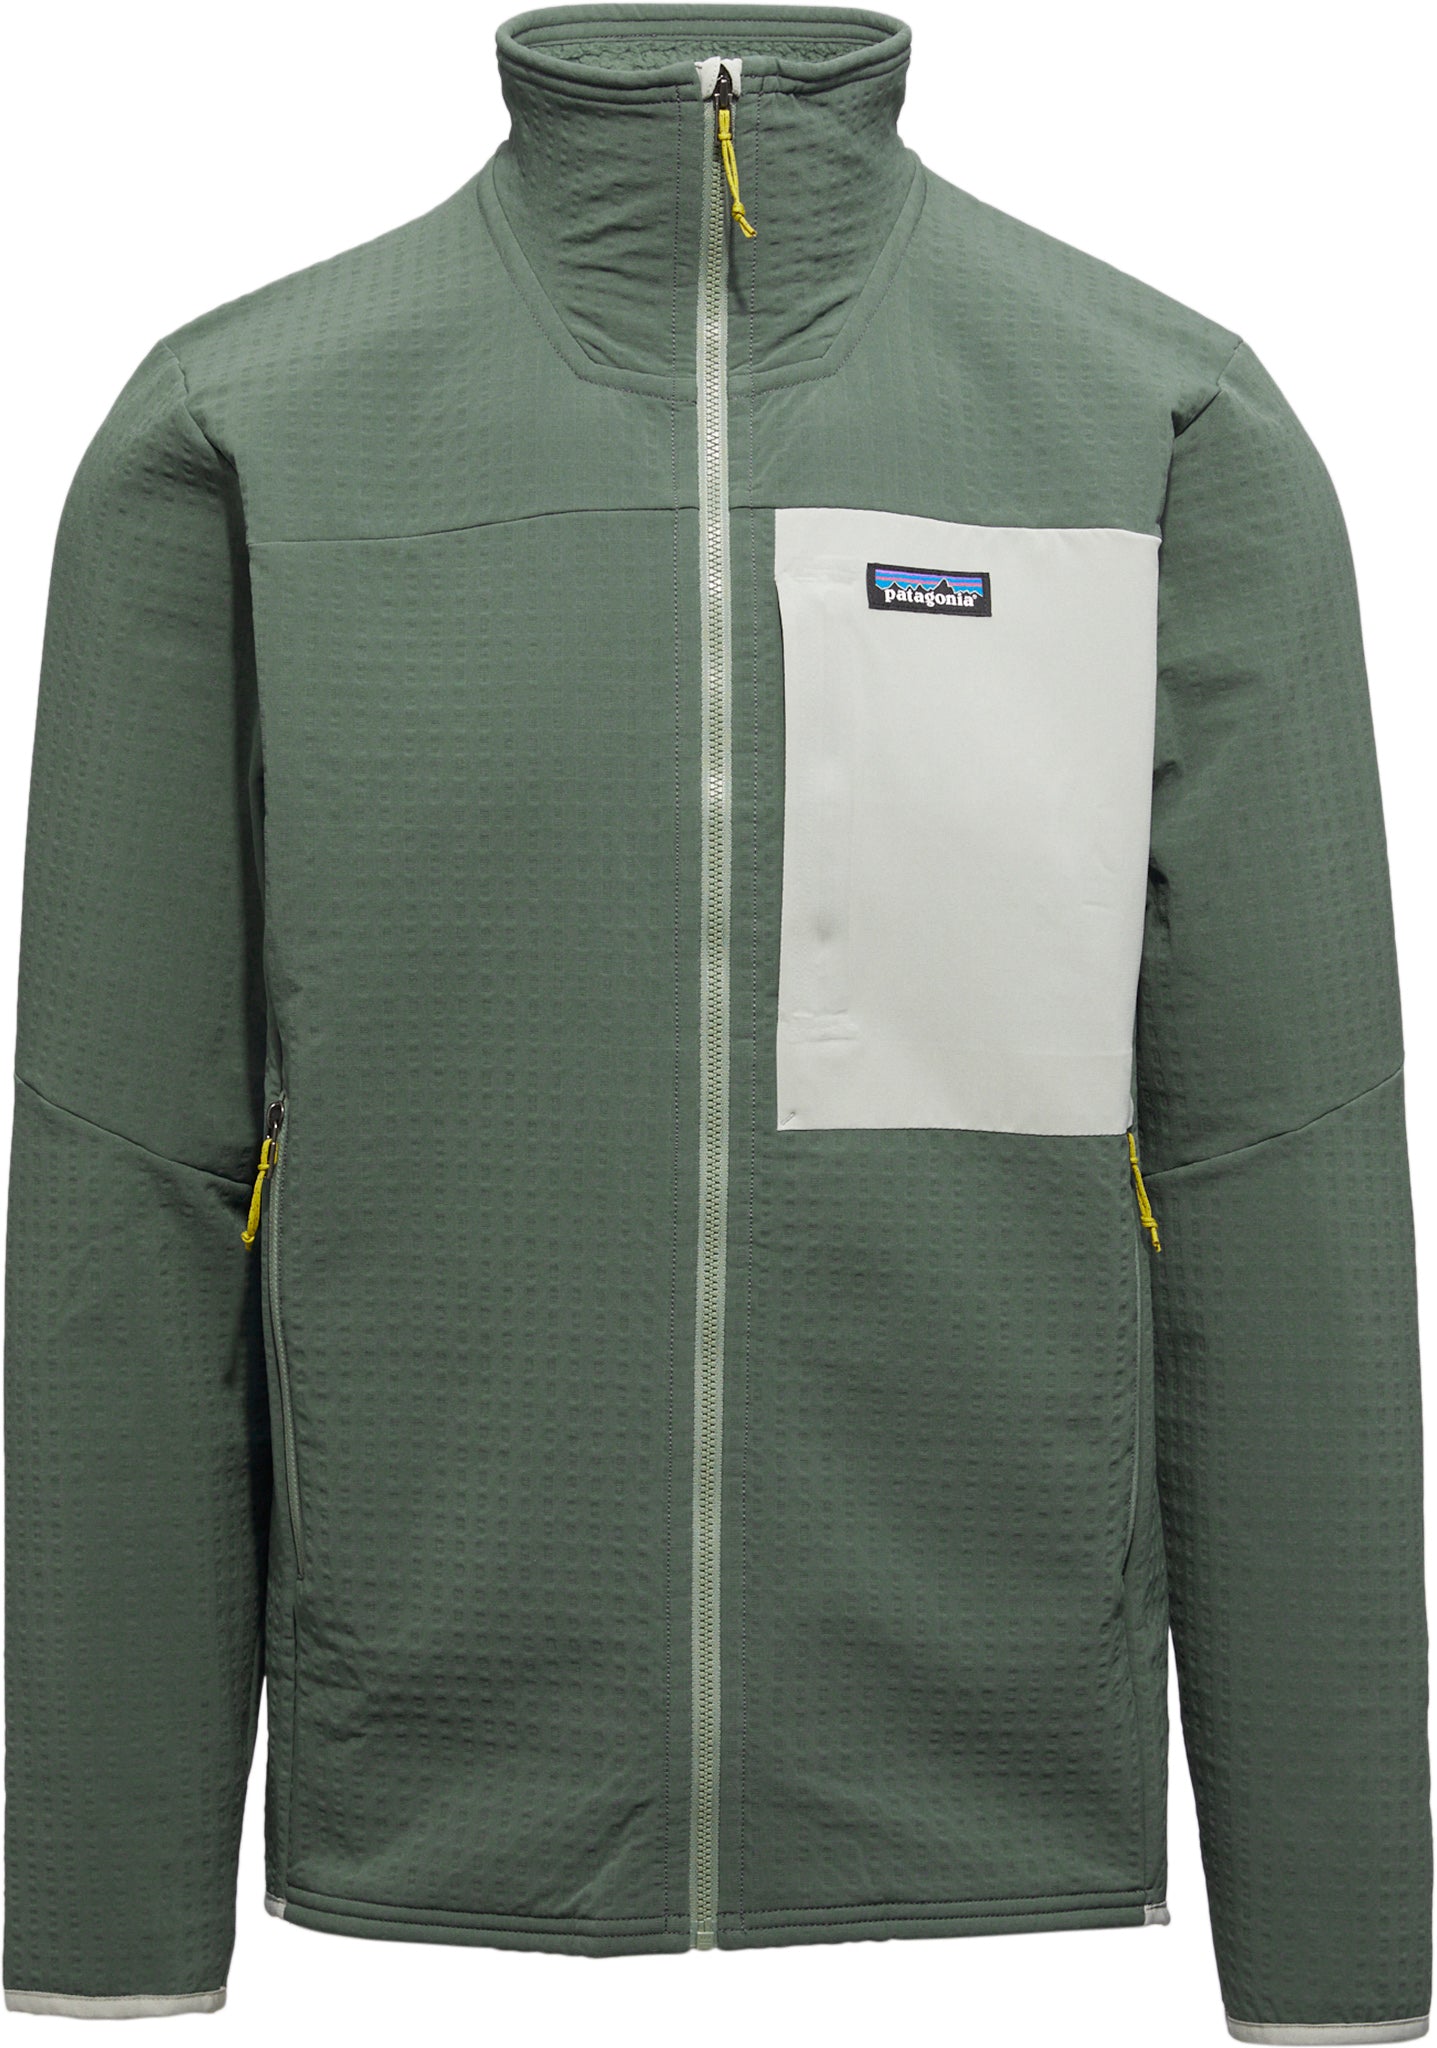 Patagonia R2 TechFace Hoody Jacket Nouveau Green Men's